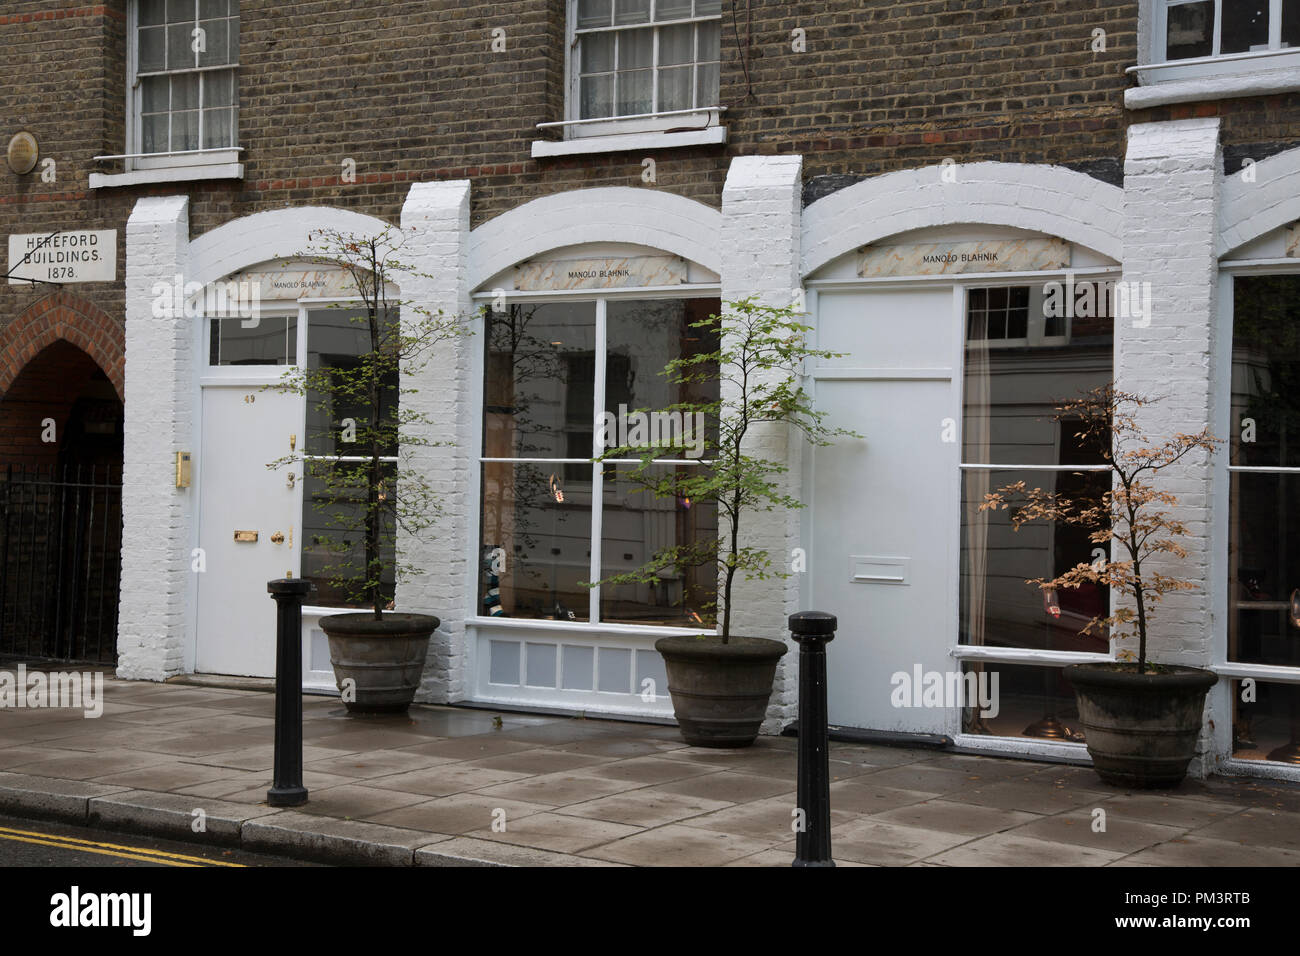 Manolo Blahnik; Chelsea; London; England; UK Stock Photo